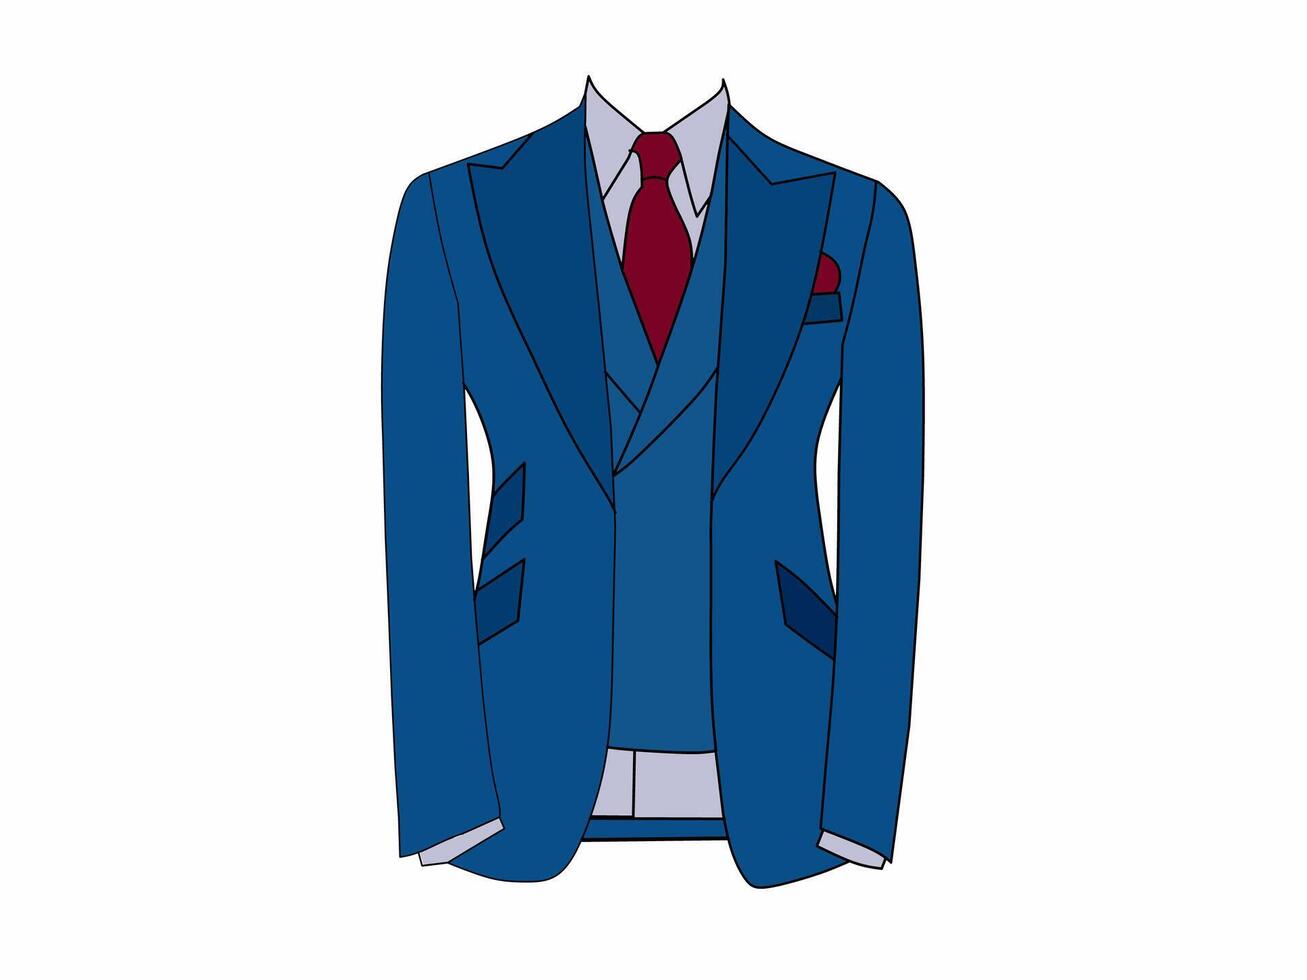 Vector illustration of dark blue men's tuxedo formal wear with red tie. Business themed formal wear illustration concept